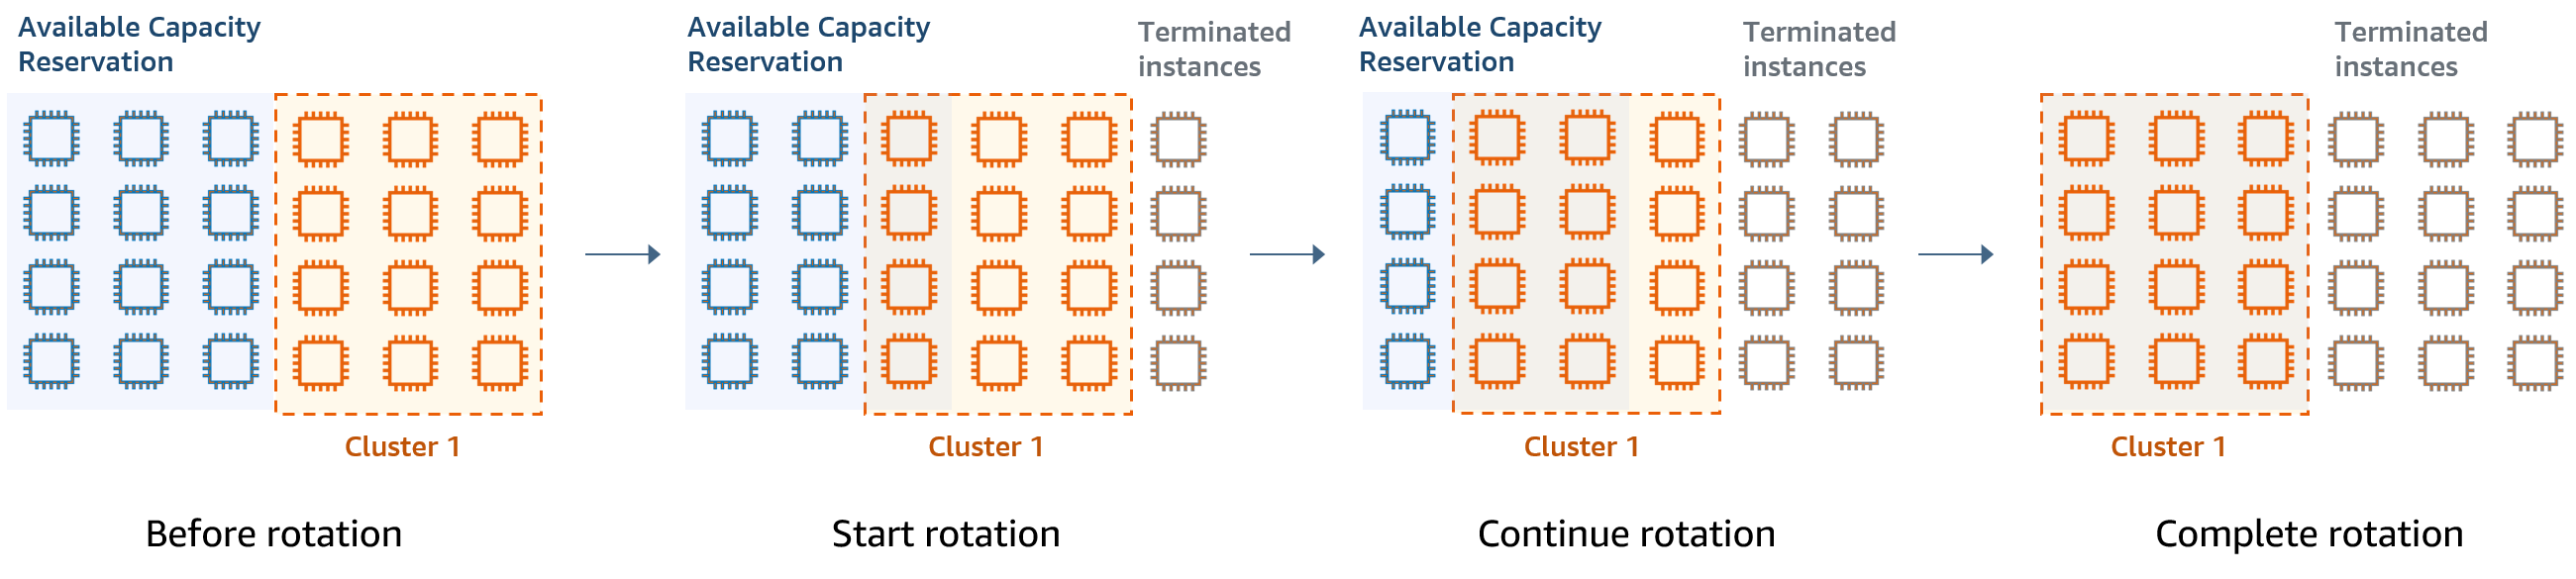 Cluster-Rotation unter Verwendung verfügbarer Kapazitätsreservierungen